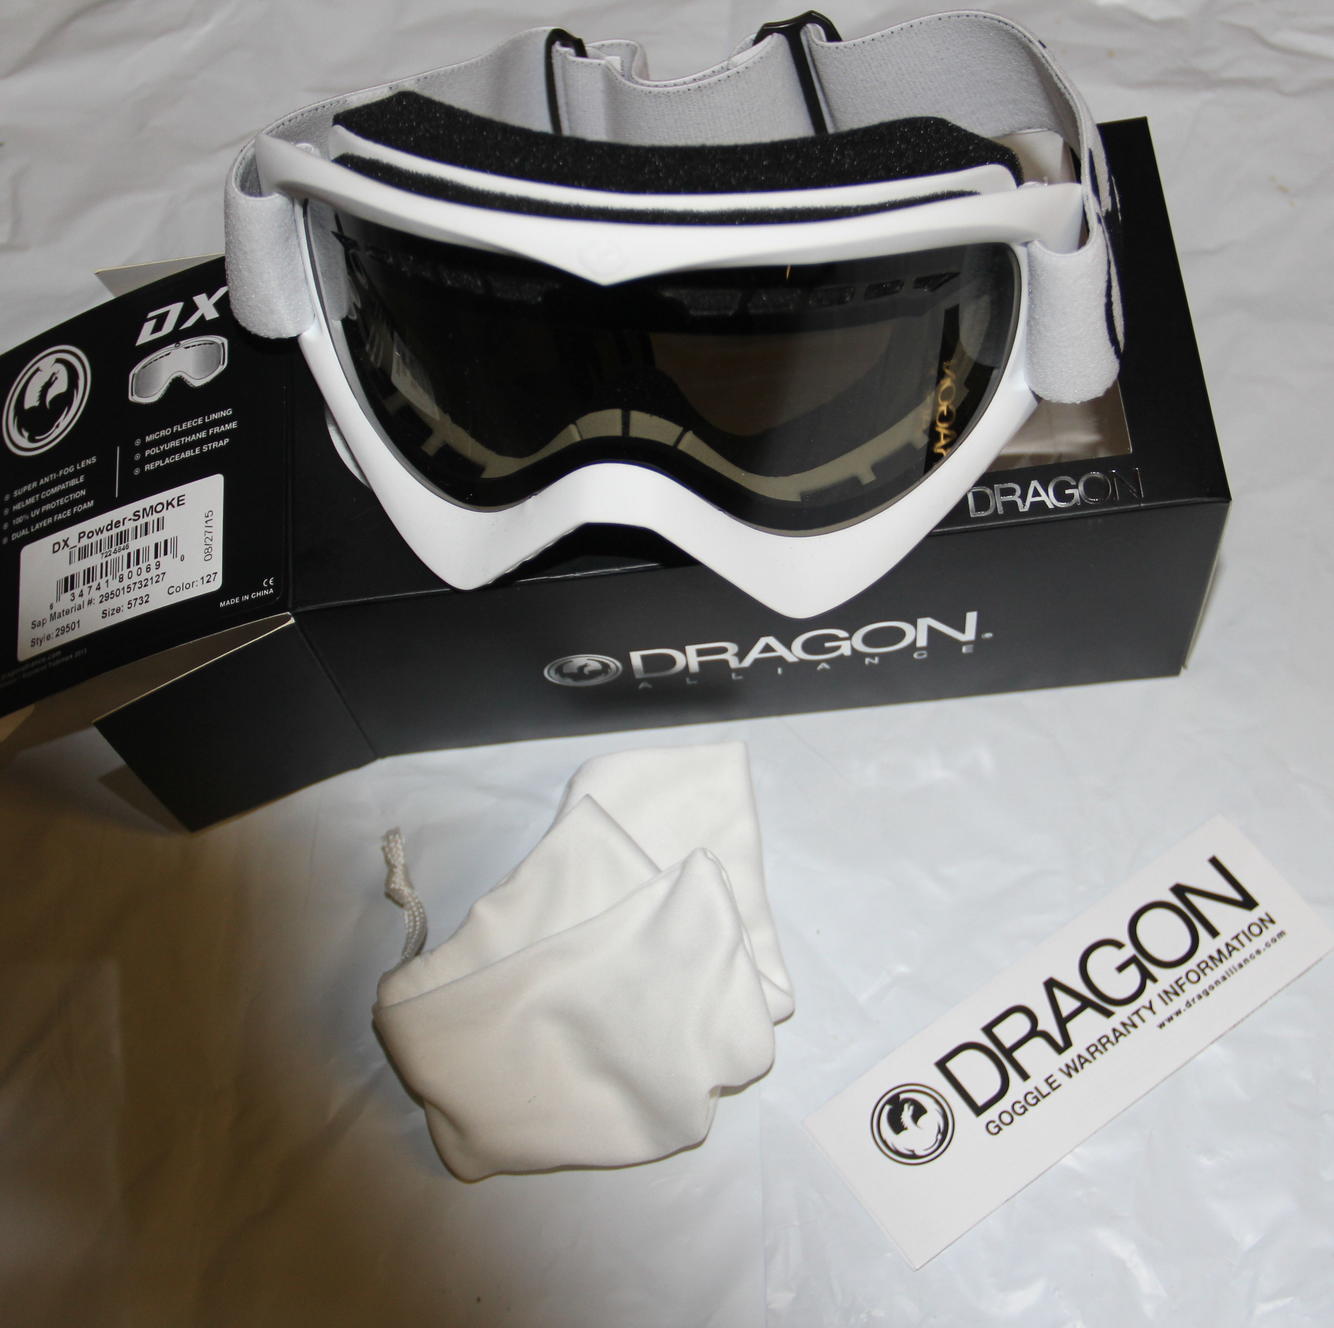 Dragon Alliance DX Snow Ski Goggles 722-5847 Powder White Black Amber Lens 